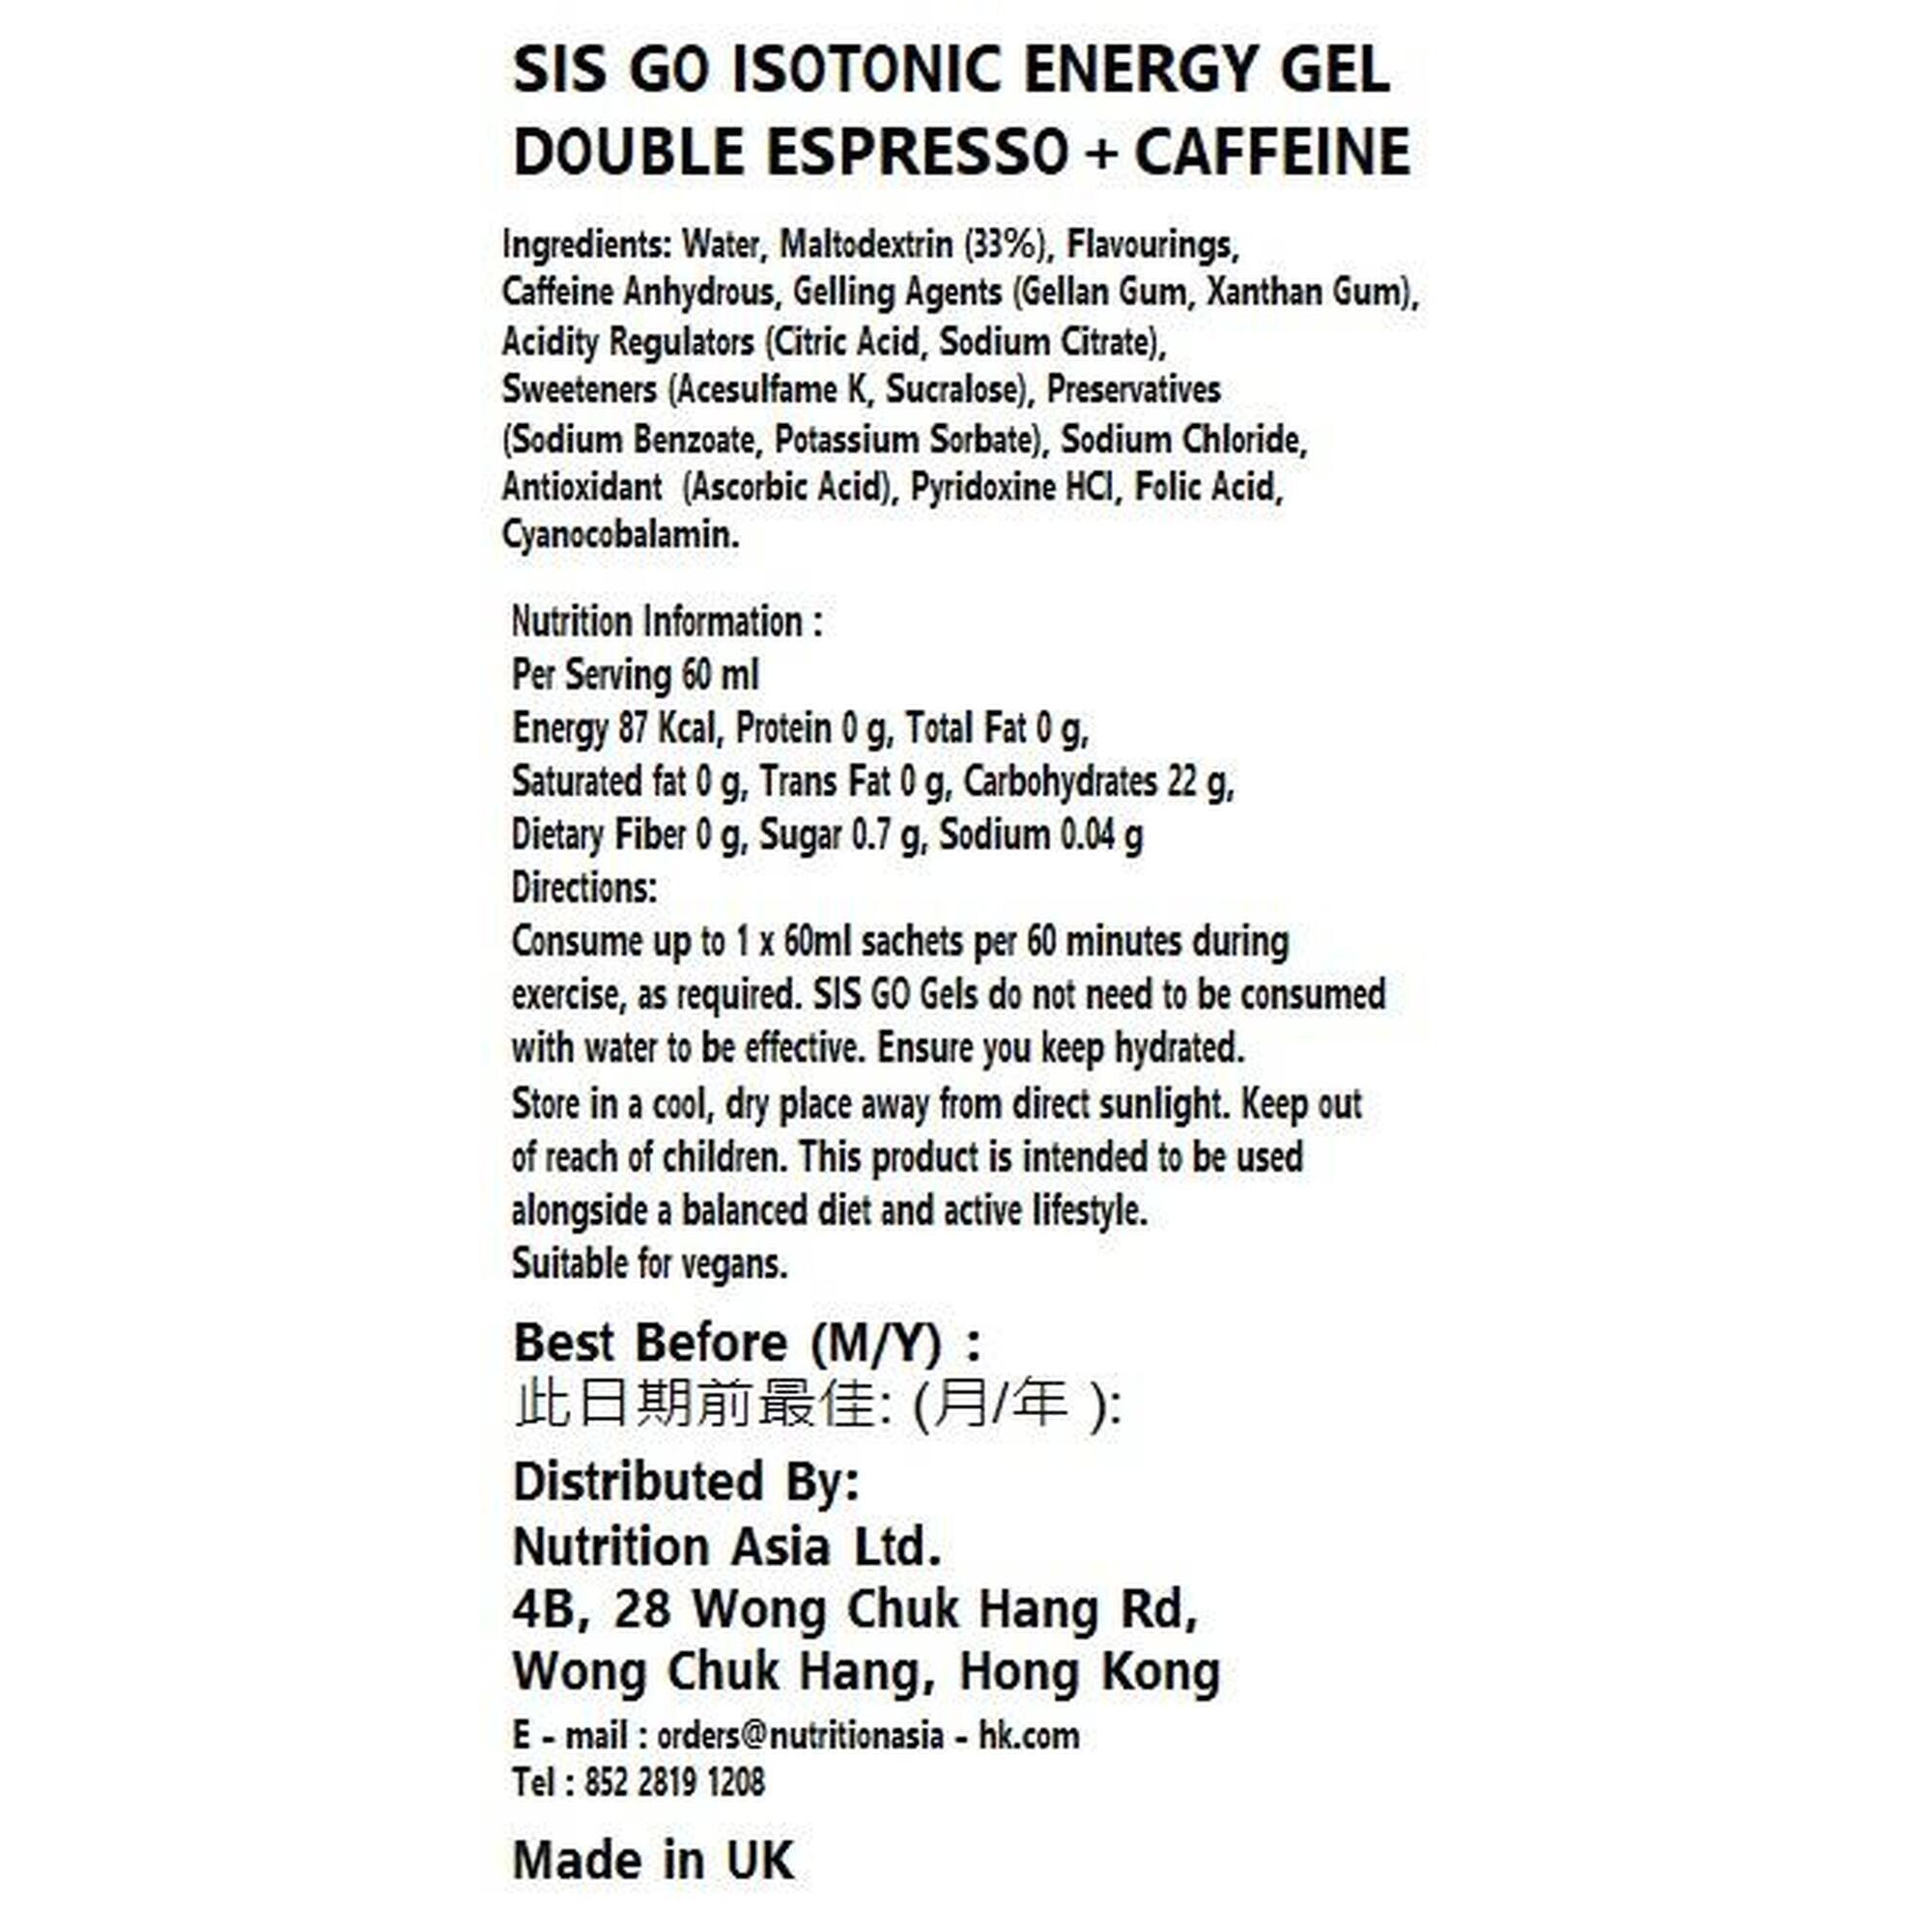 Go Isotonic Energy Gel 60g (6 PACK) - Double Espresso + Caffeine